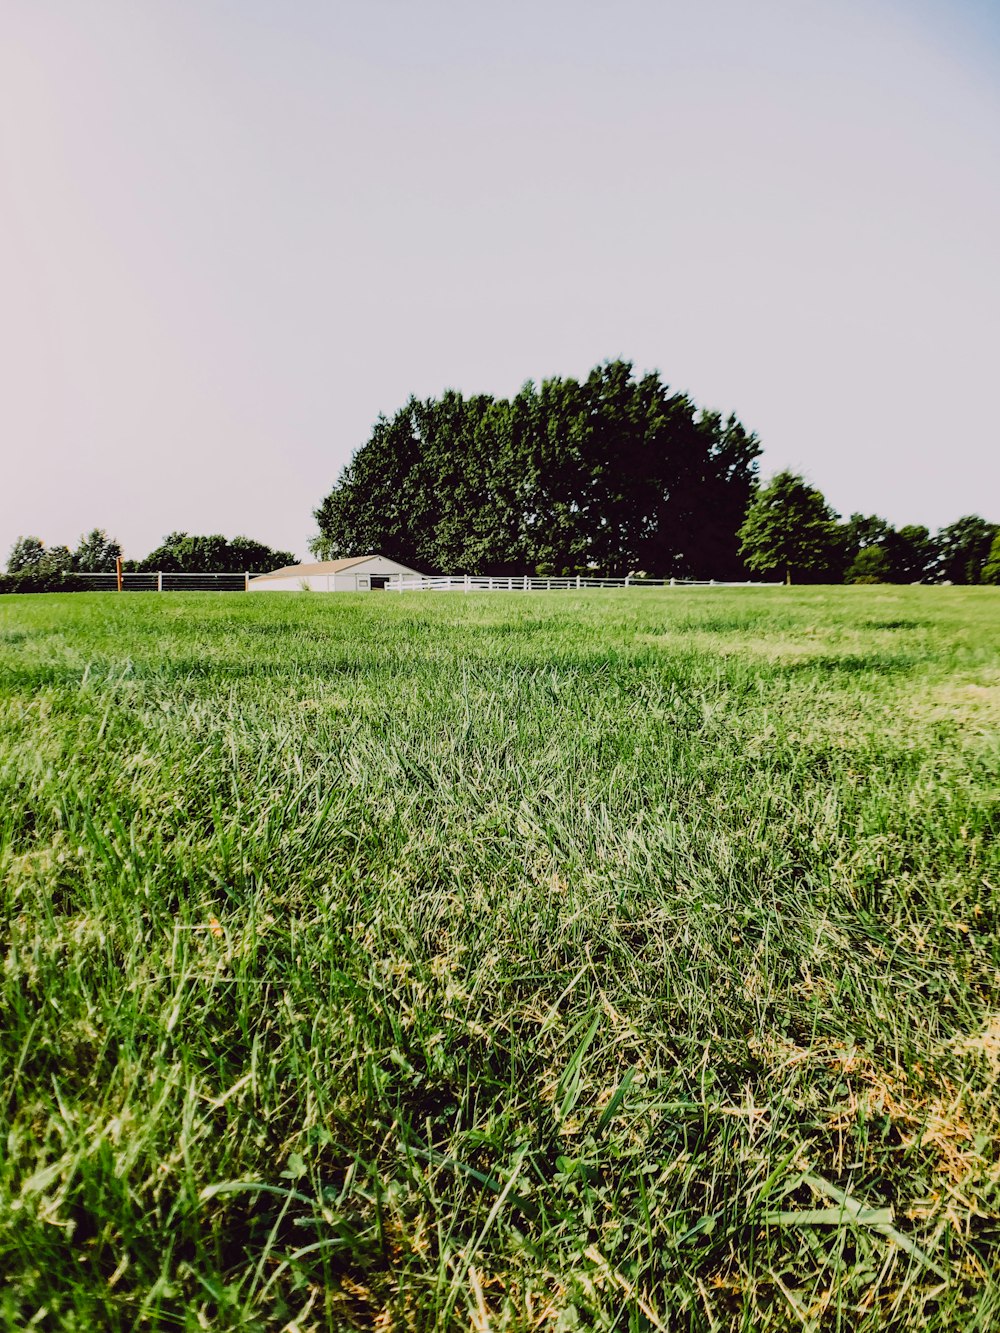 green grass field near green trees during daytime